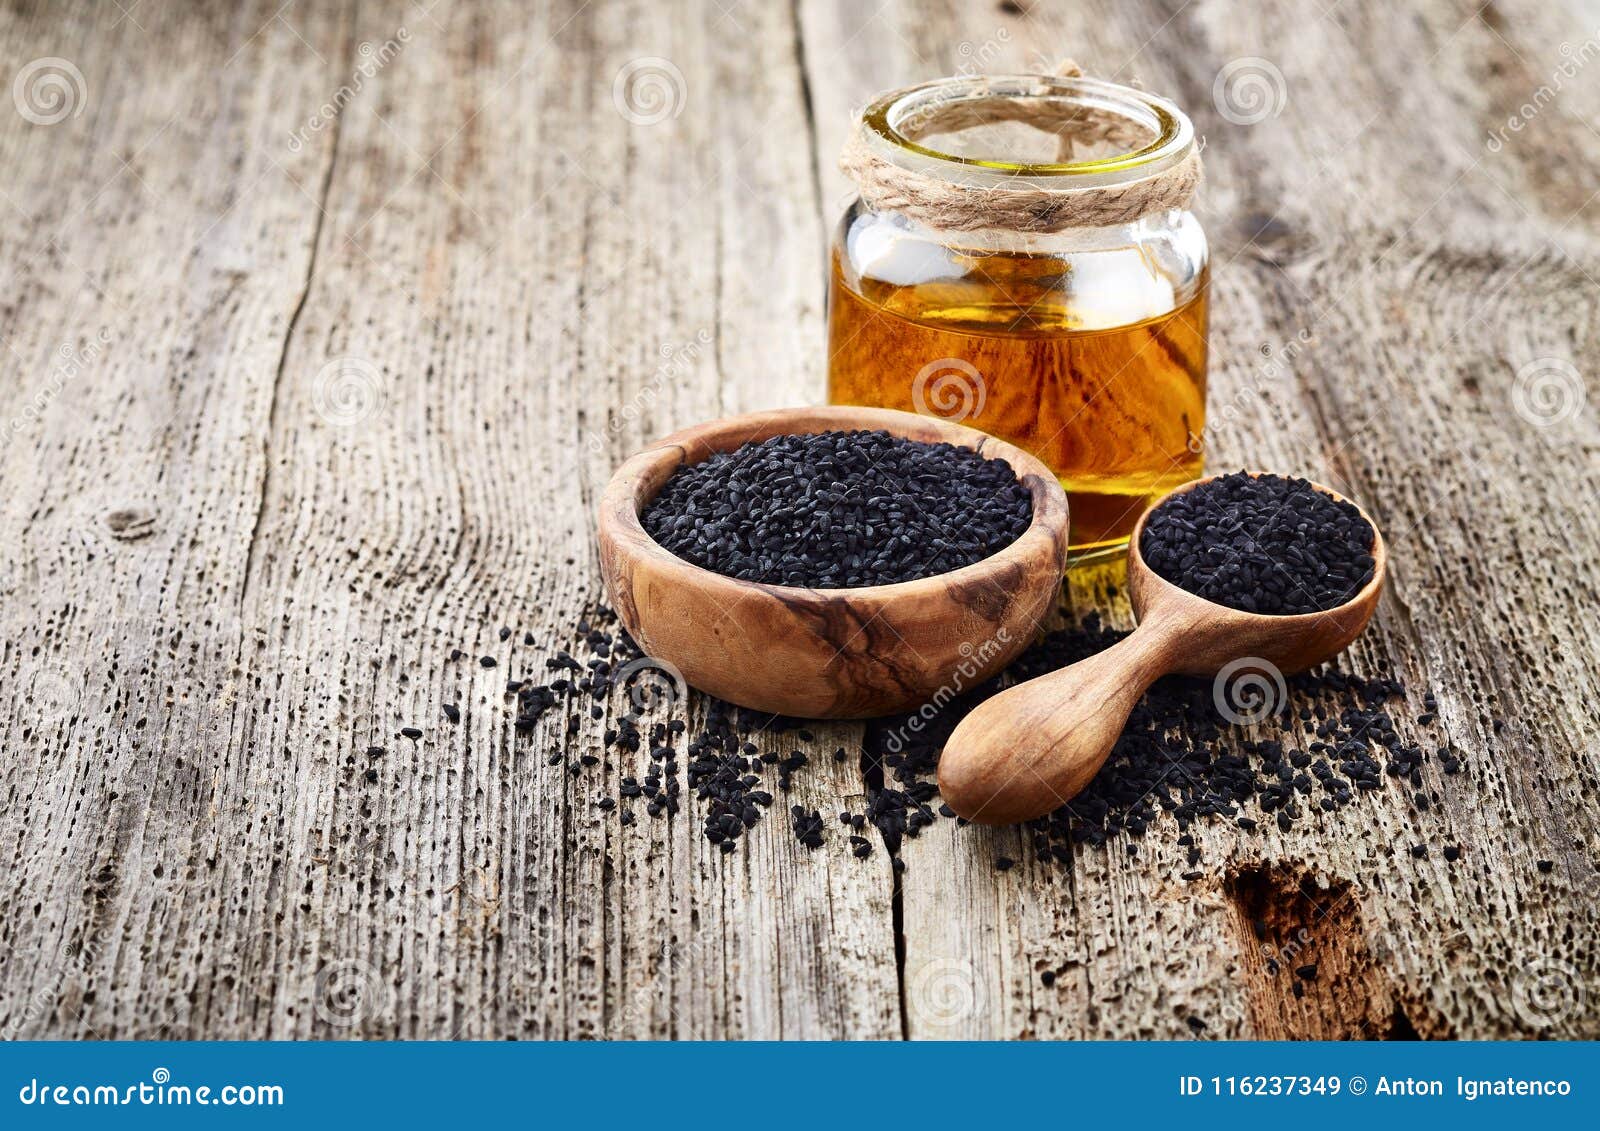 Black cumin oil stock image. Image of roman, health - 116237349